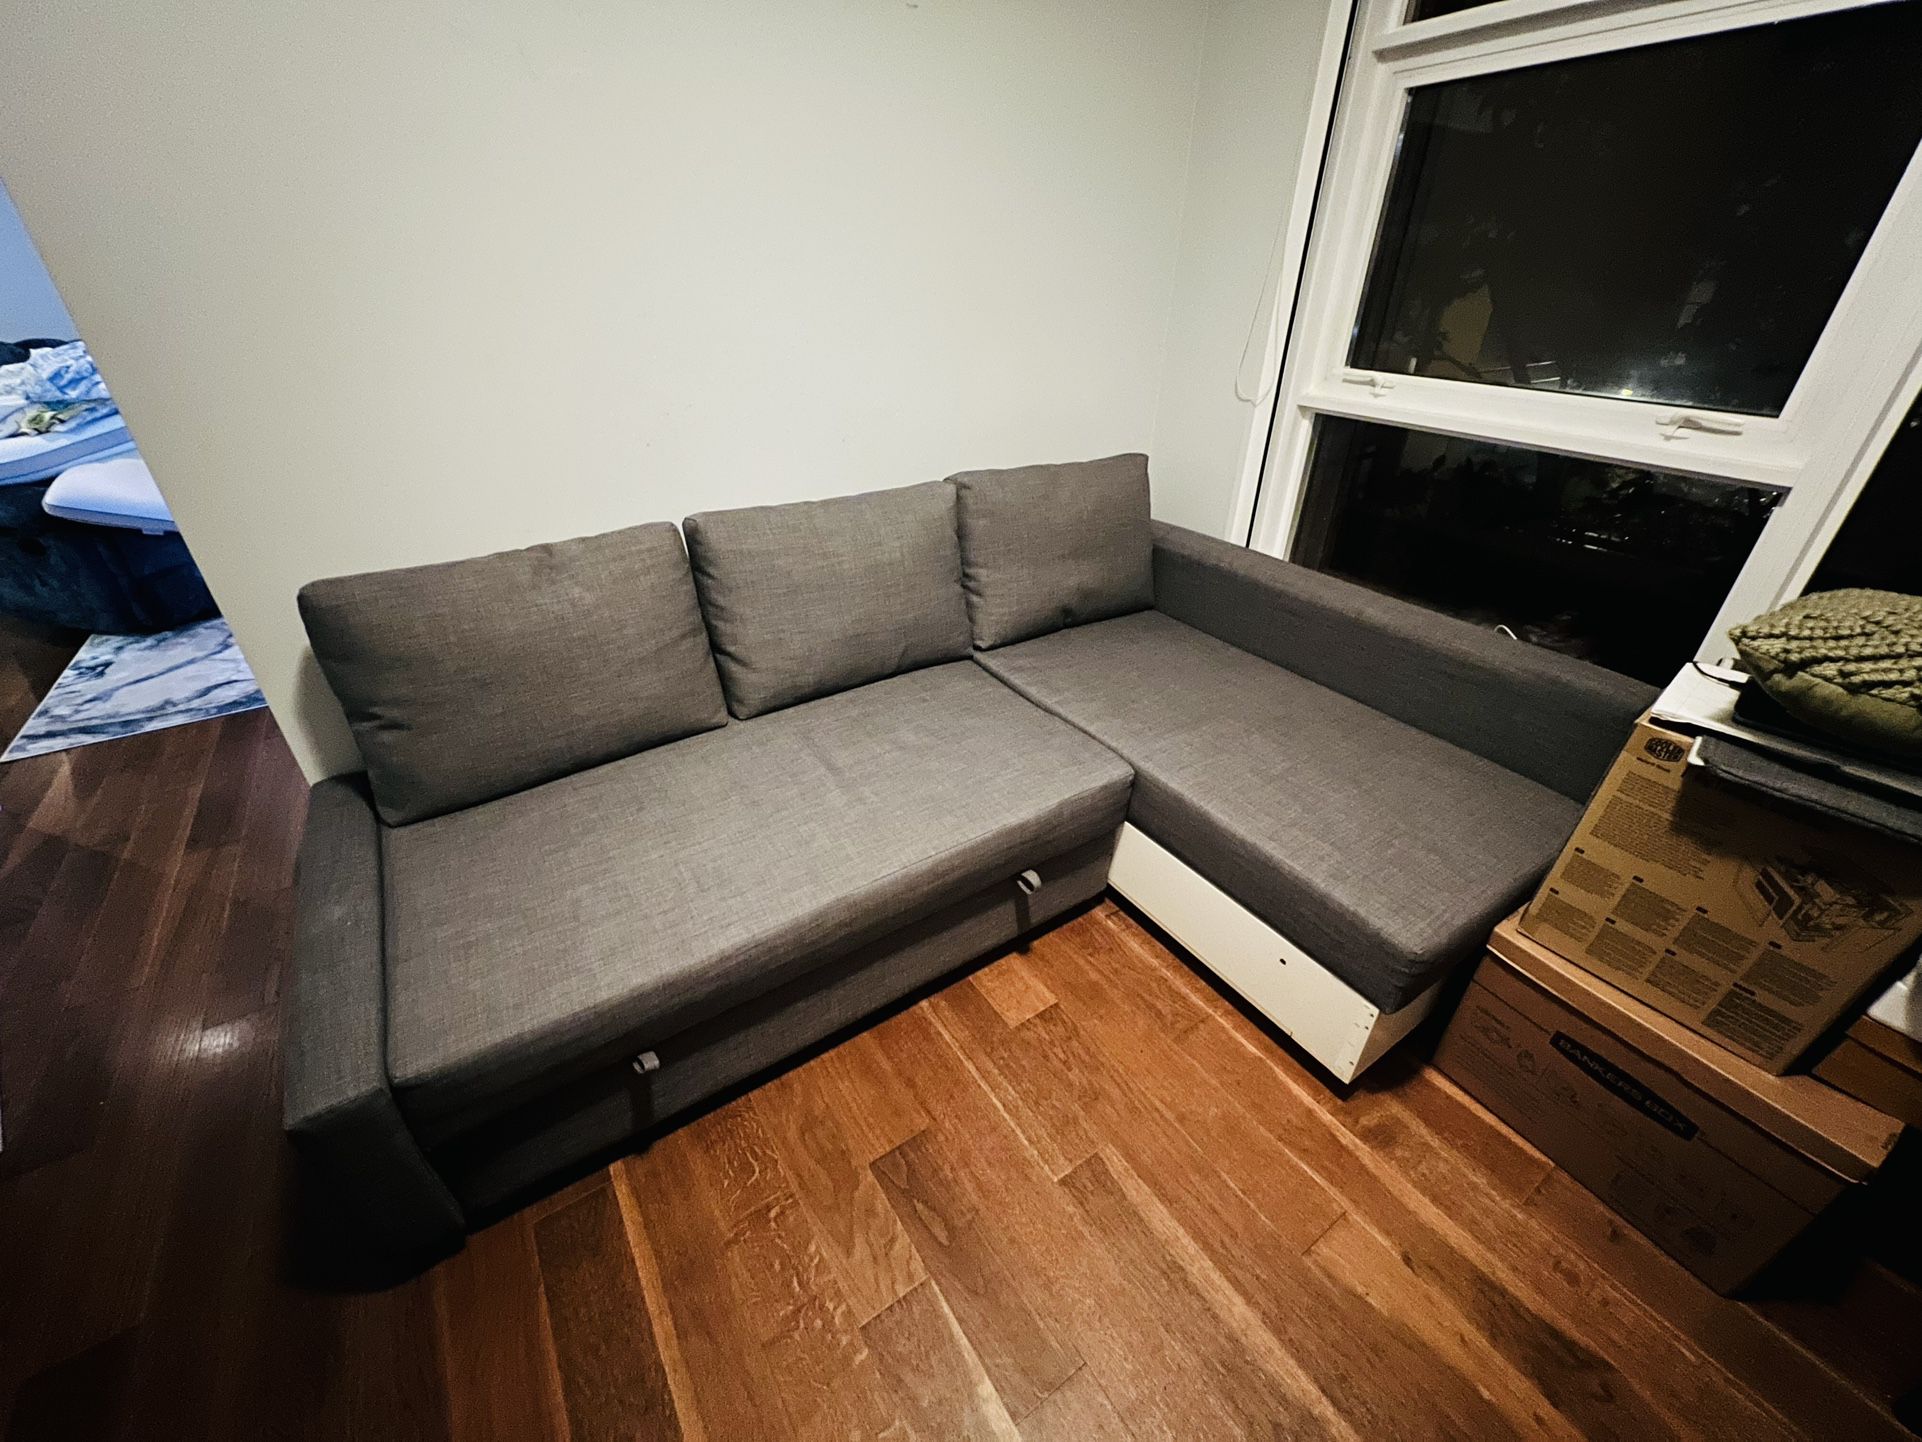 IKEA Friheten Sectional Sleeper Sofa With Storage Hyllie dark gray